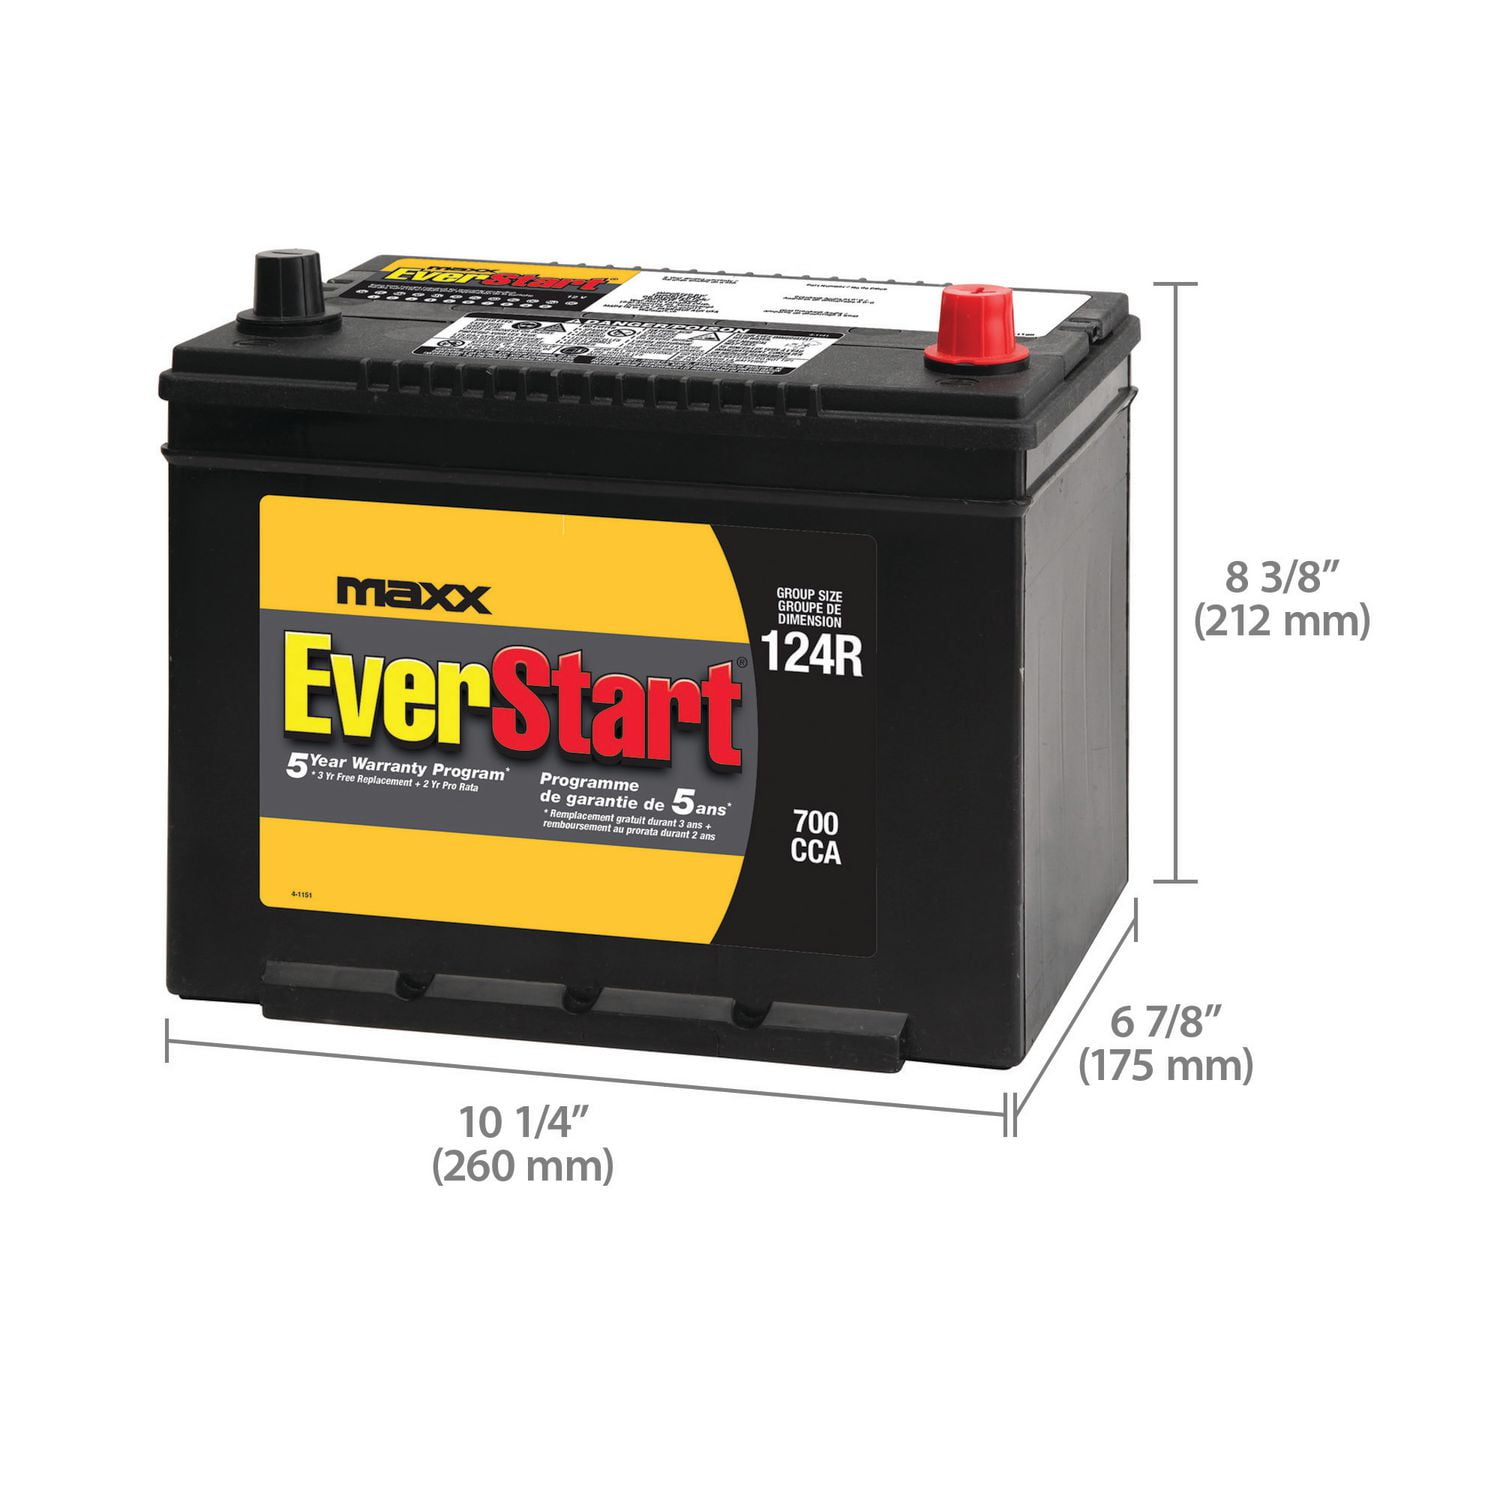 EverStart Maxx Lead Acid Automotive Battery, Group Size 124R 12 Volt, 700  CCA 